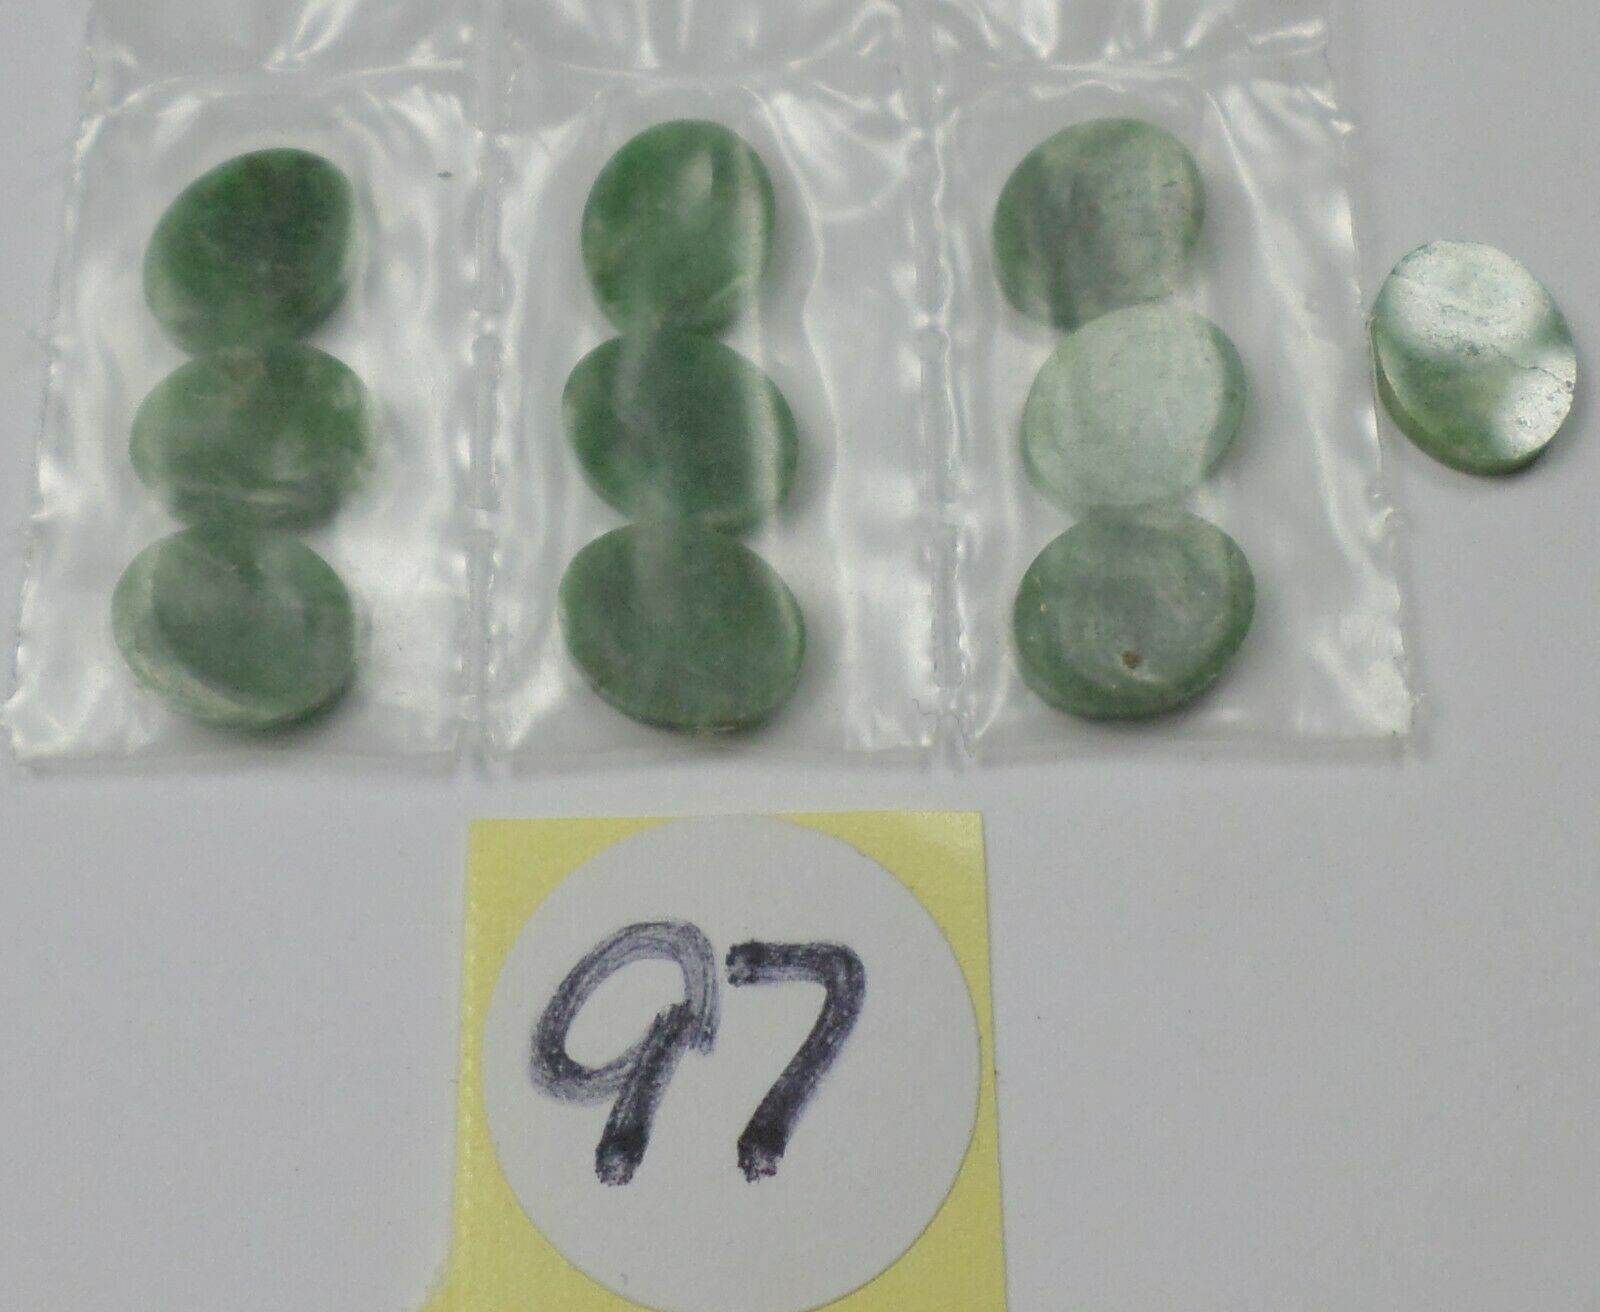 10 Vintage 10x8mm Oval Nephrite Green Jade Loose Stones Cabochons Gemstones New